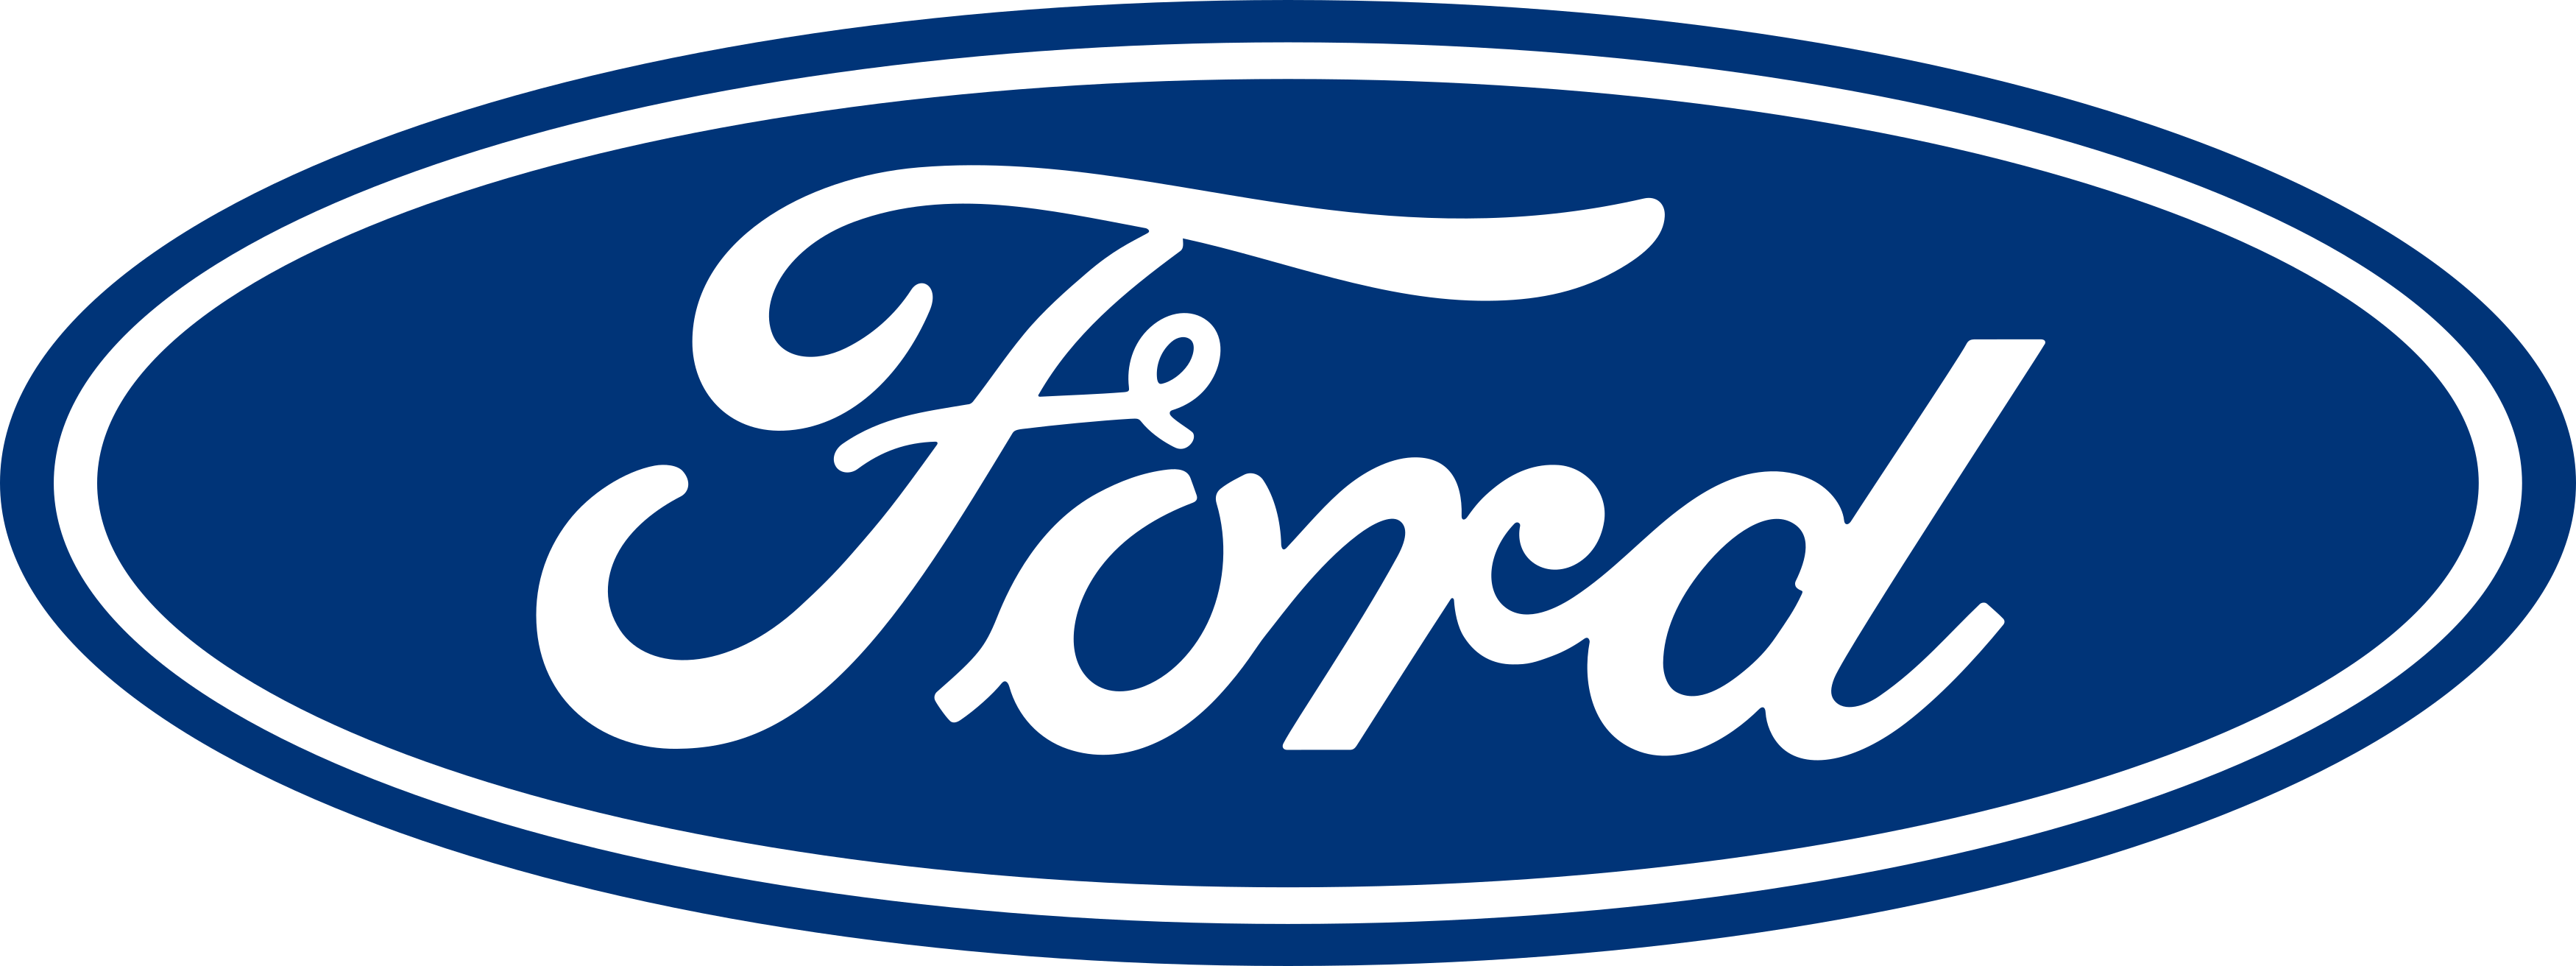 Ford Logo.